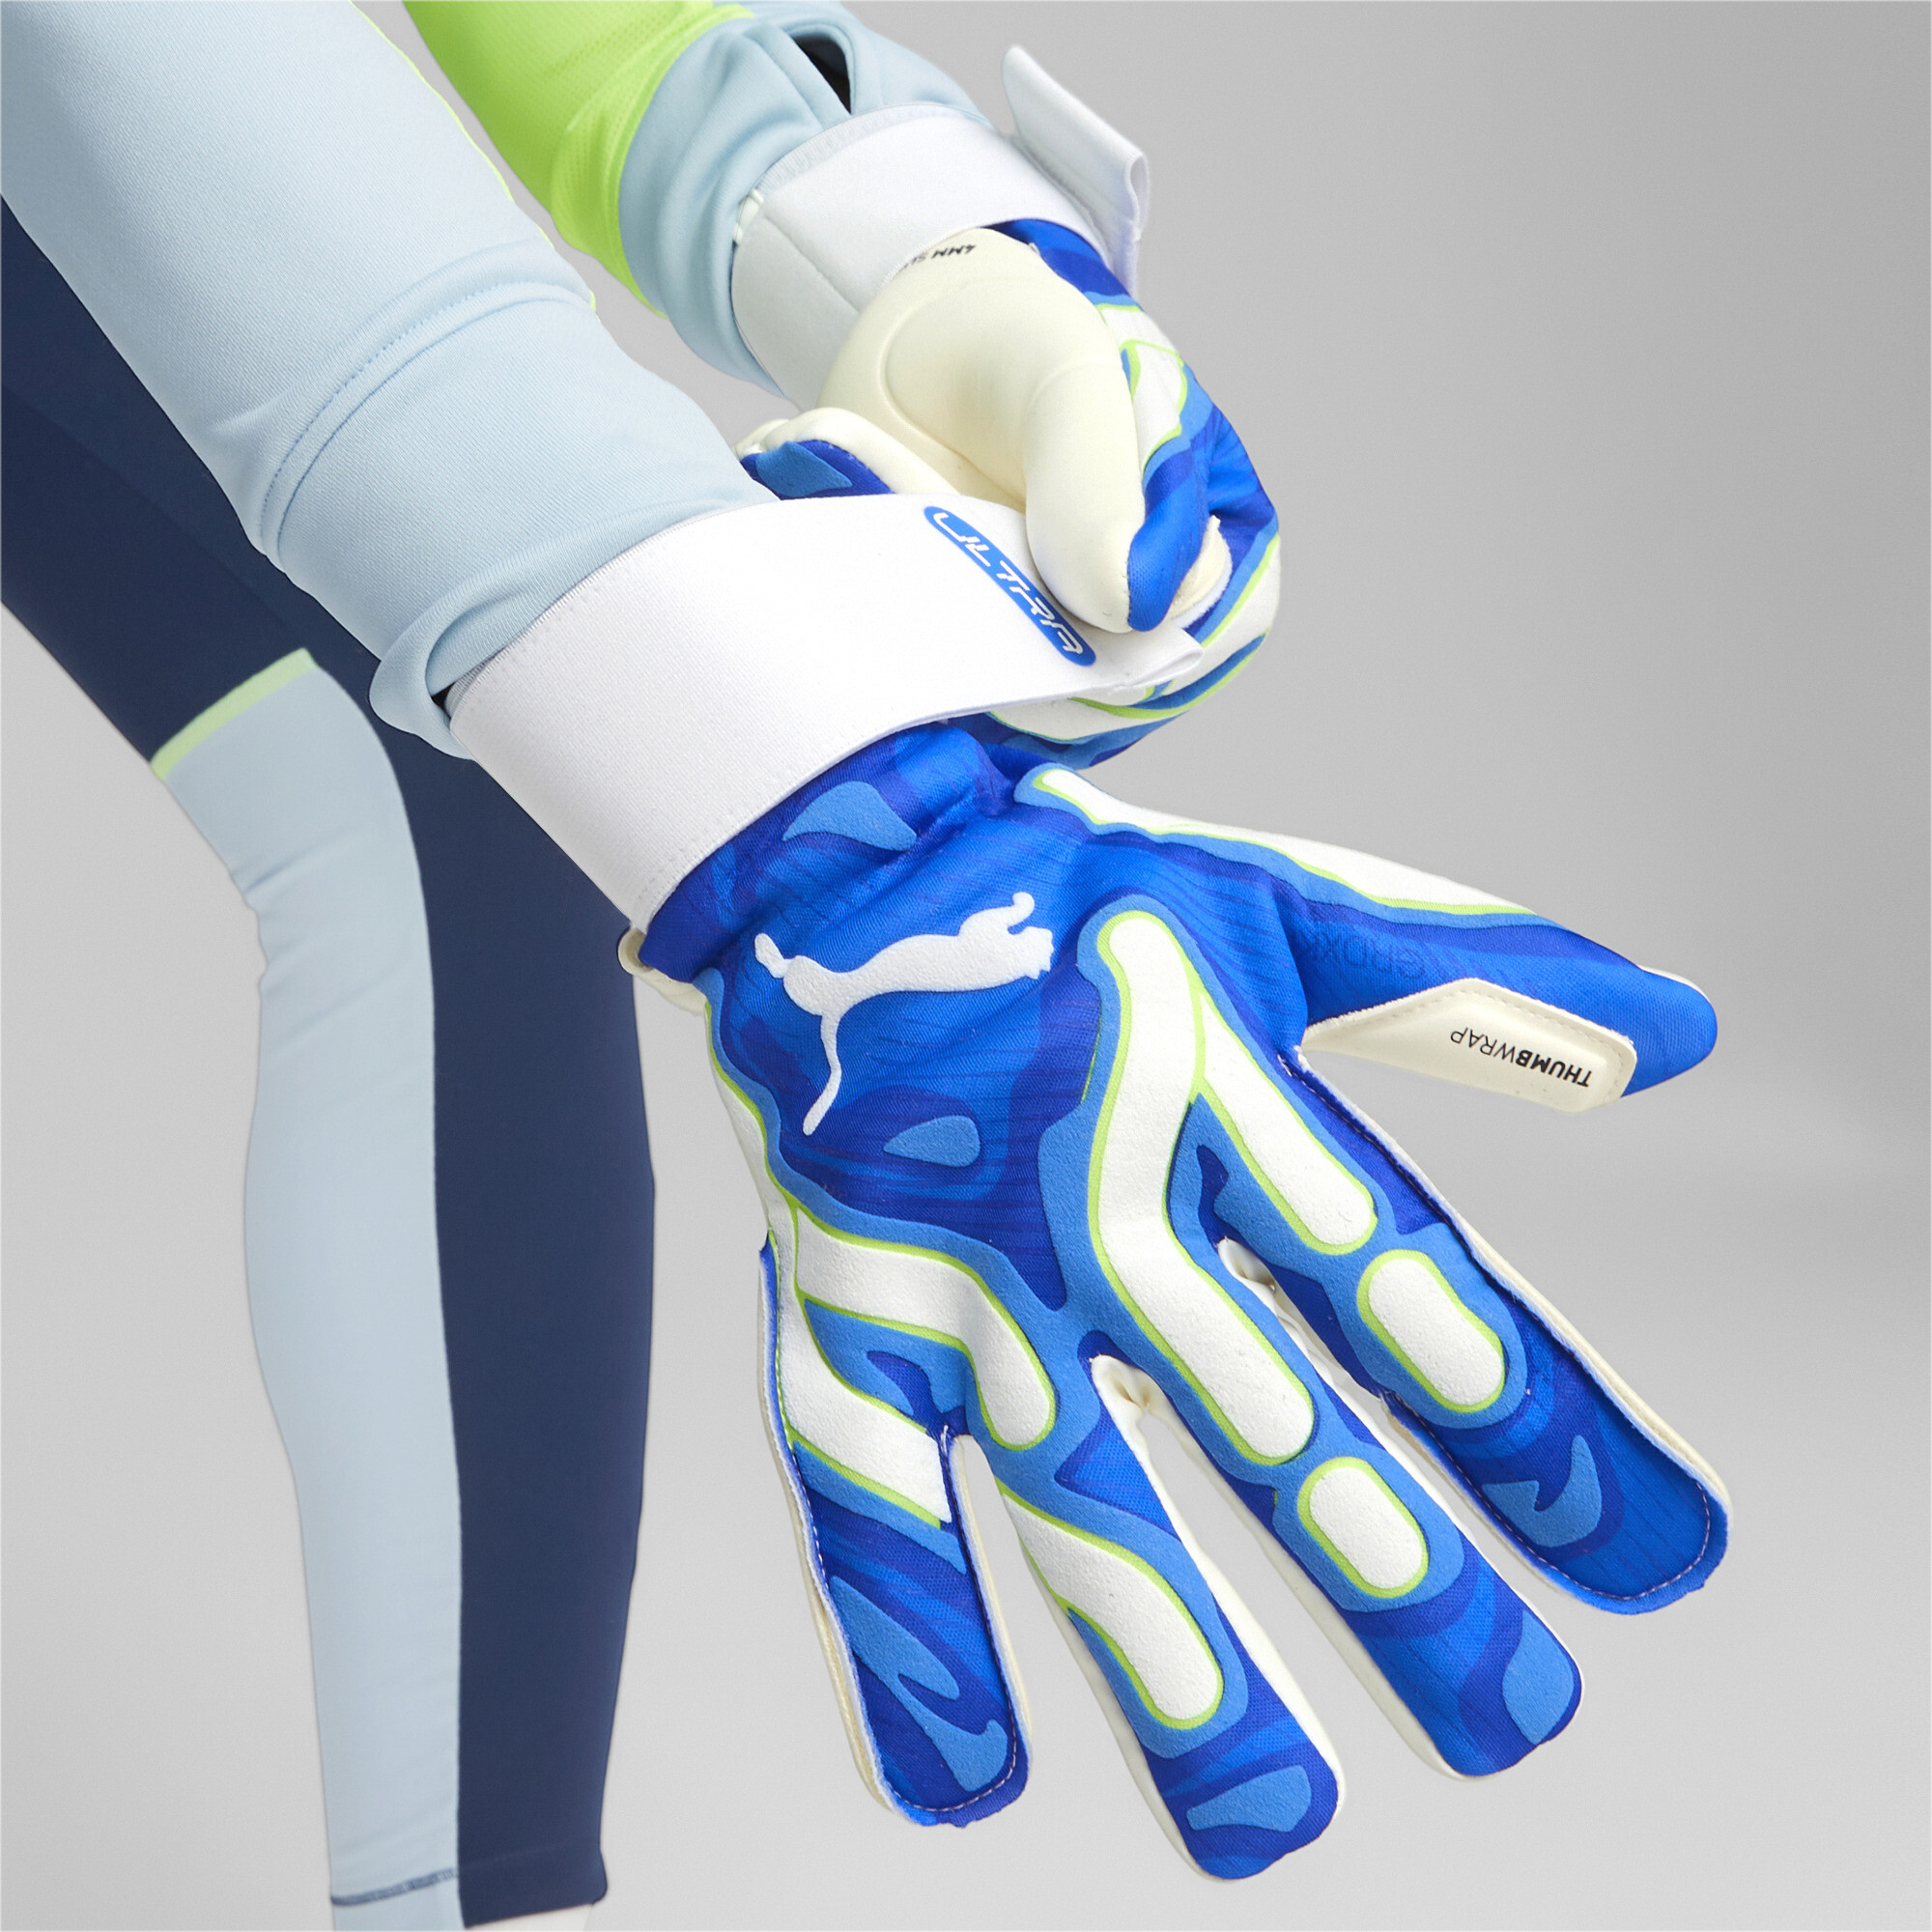 Puma ULTRA Ultimate Hybrid Goalkeeper Gloves, Blue, Size 8, Accessories